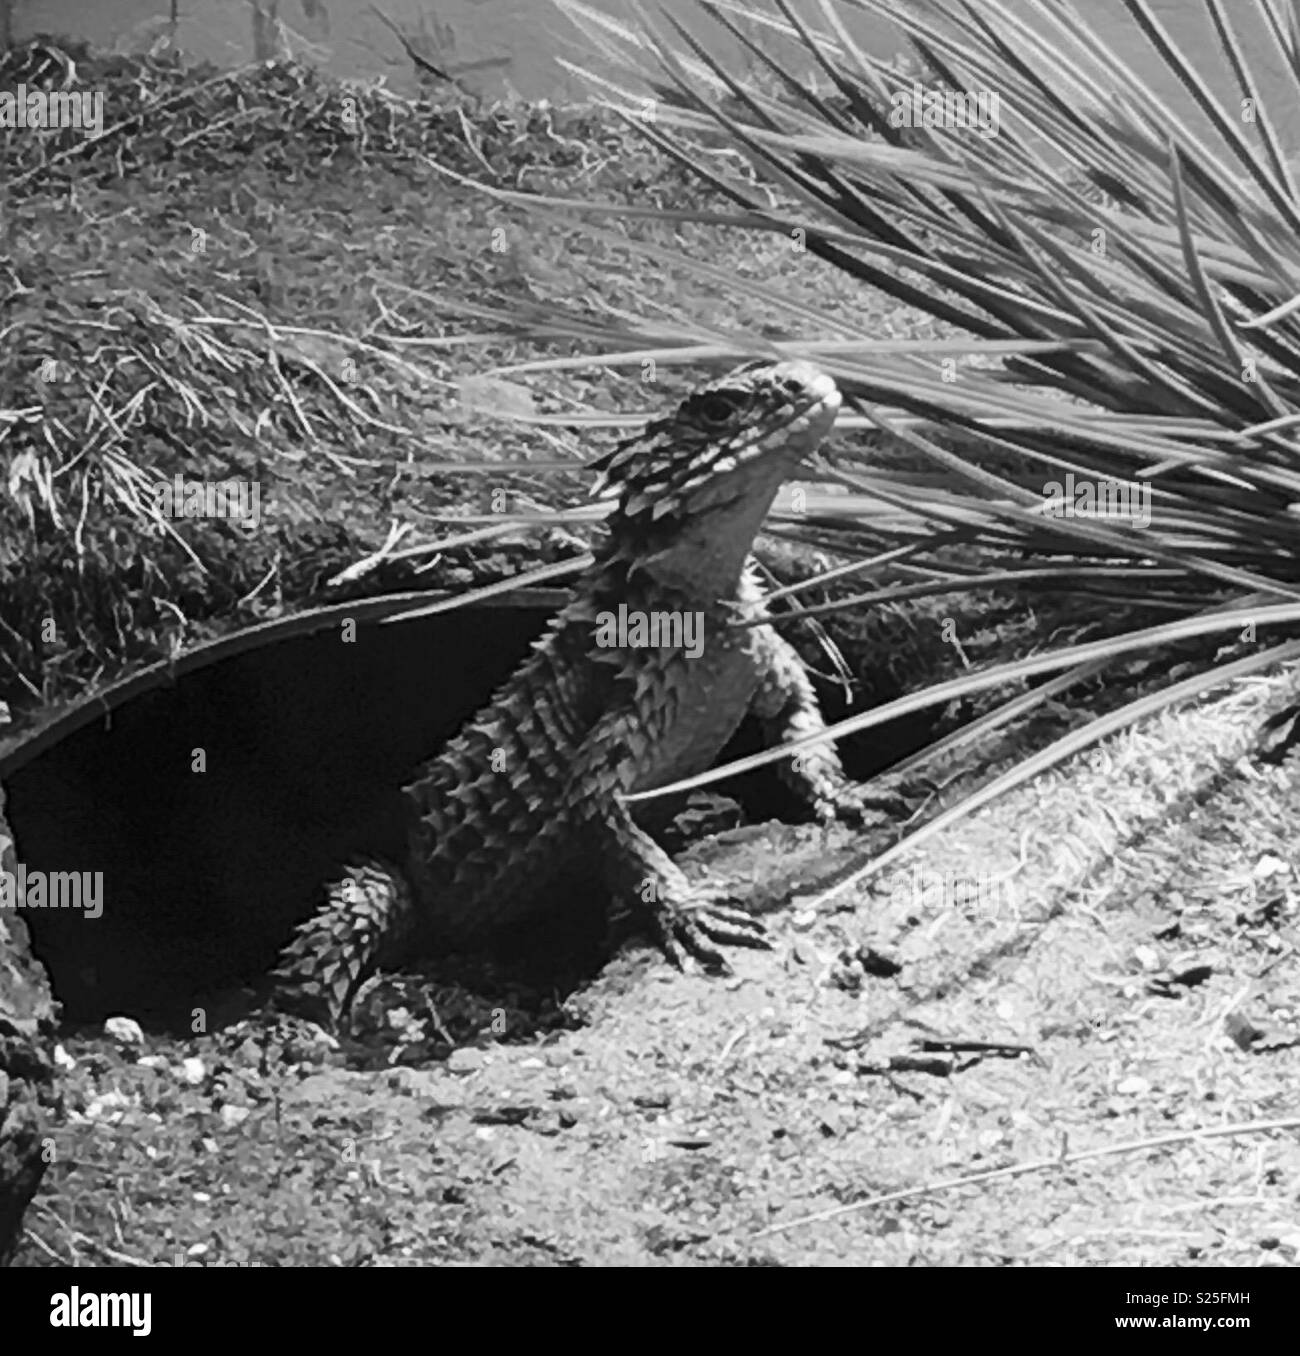 ‘Sun gazer’ lizard in black & white Stock Photo